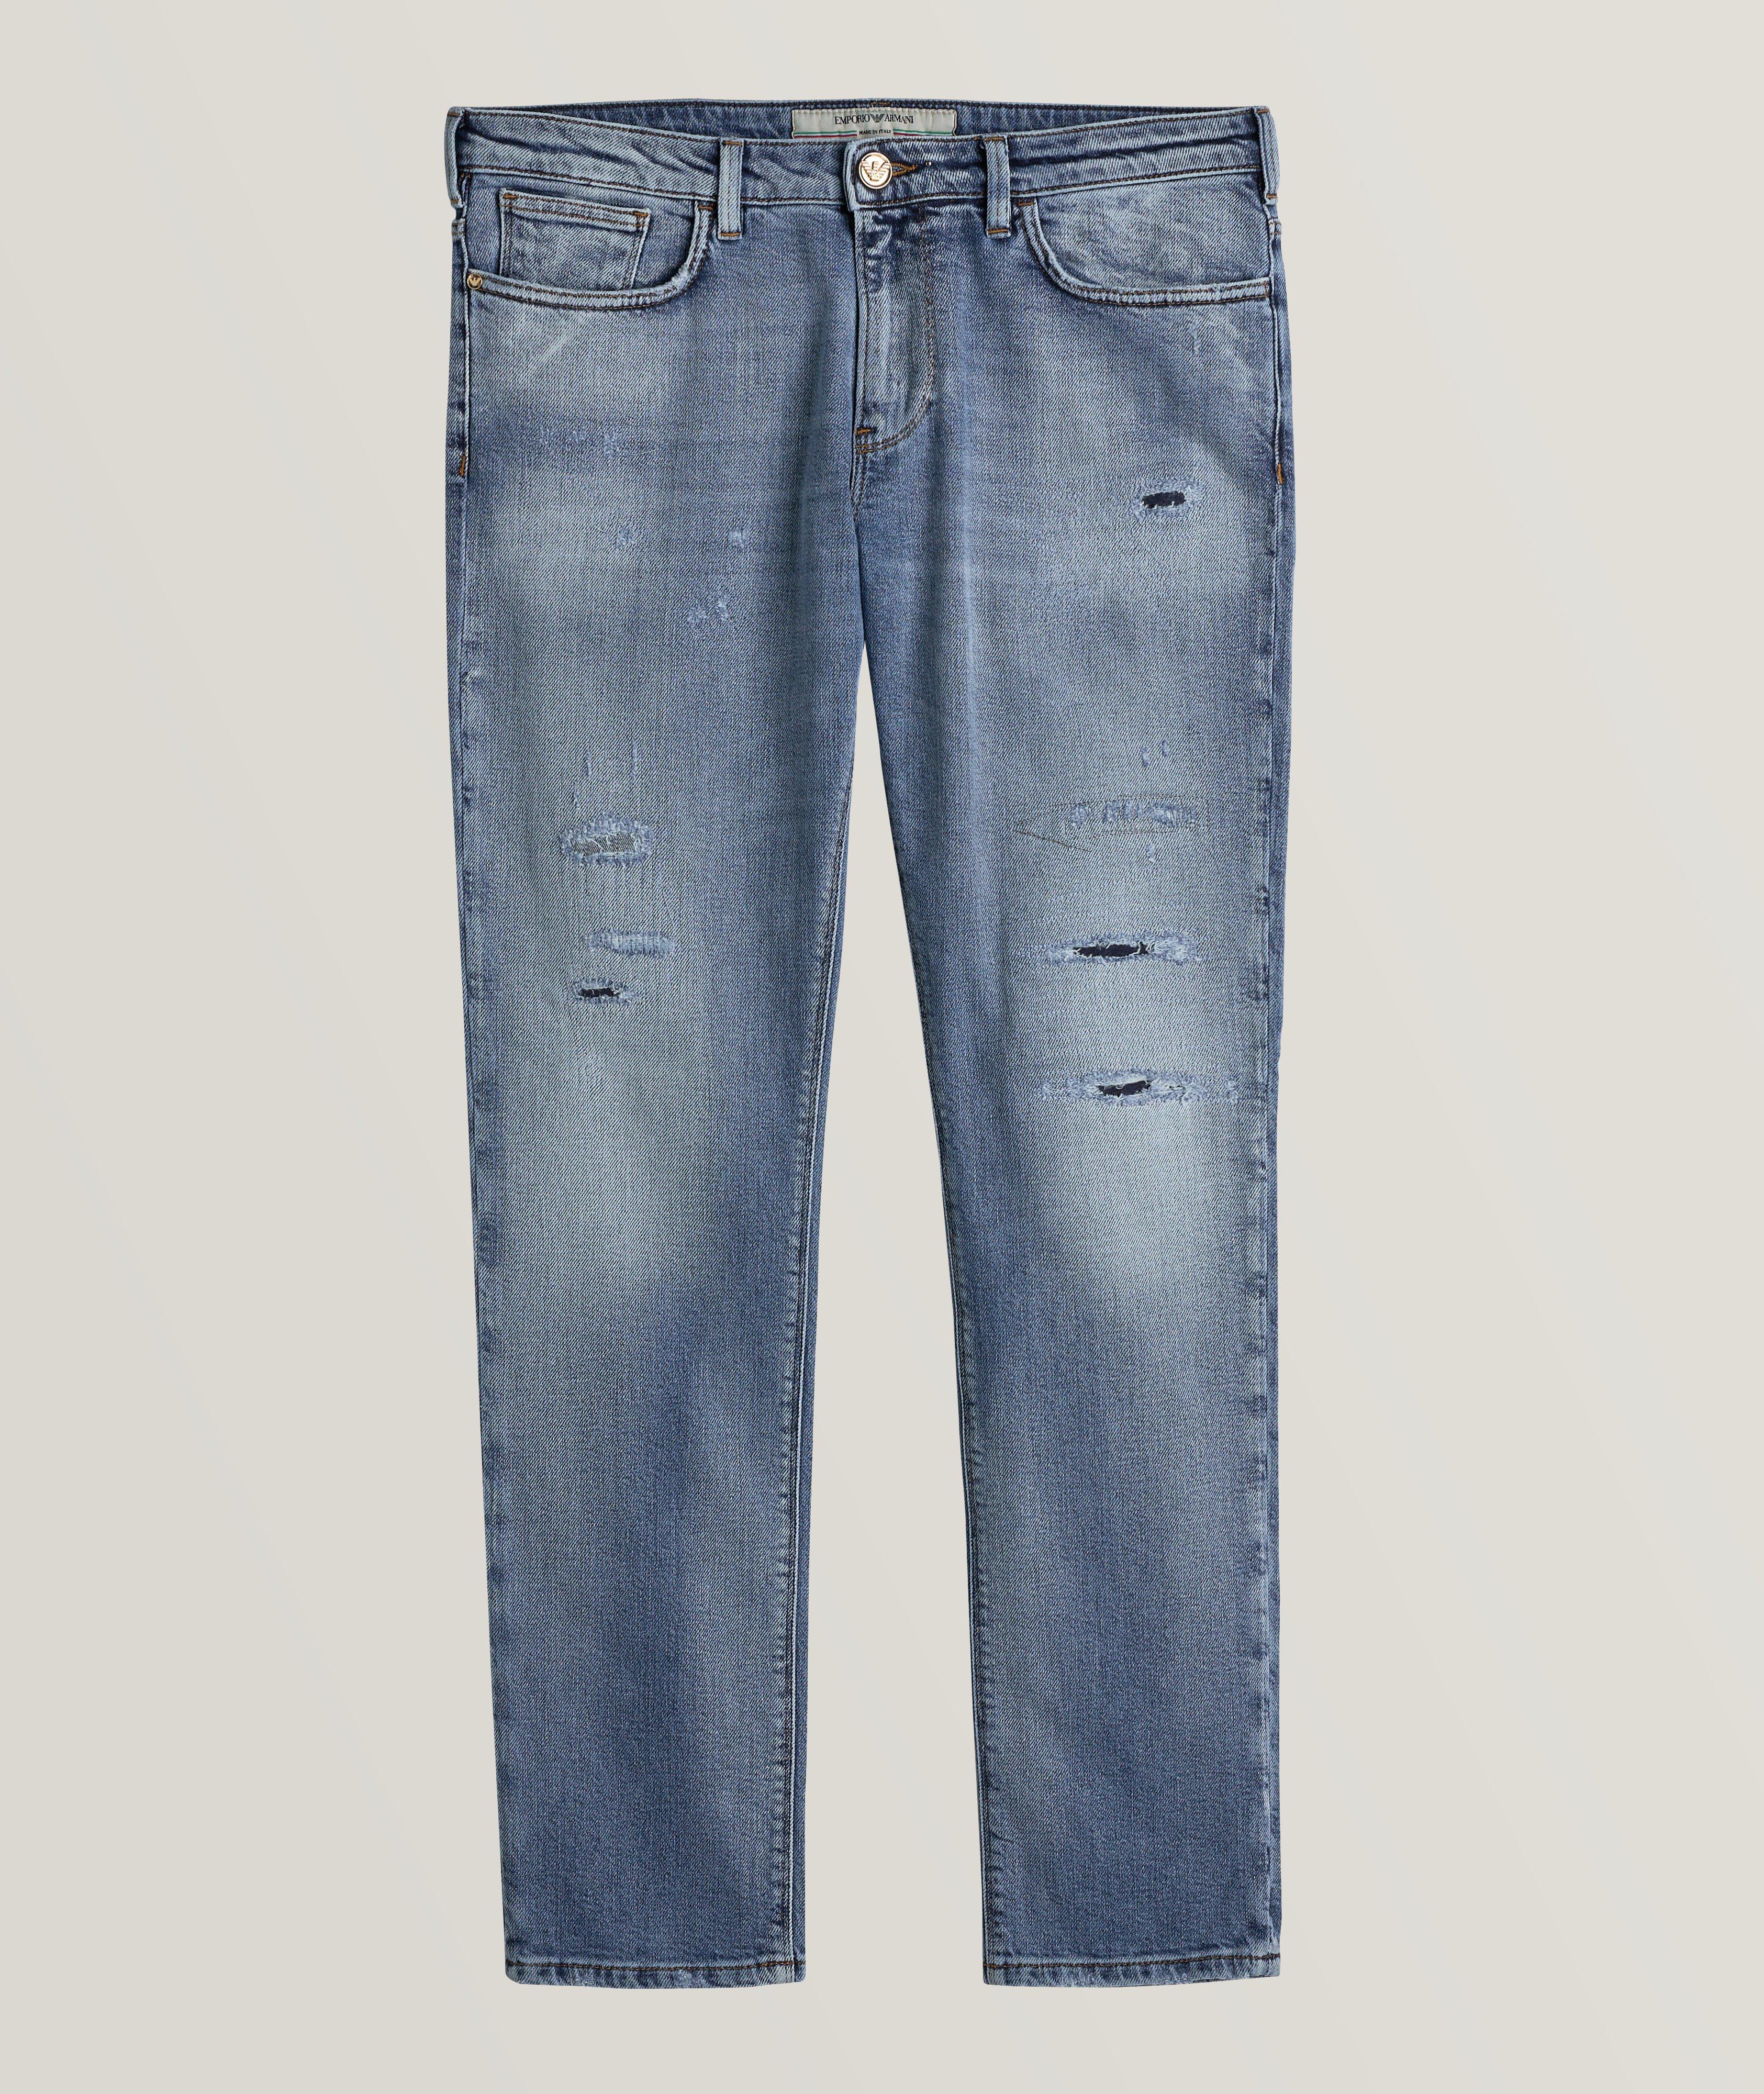 J06 Slim-Fit Stretch-Cotton Jeans image 0